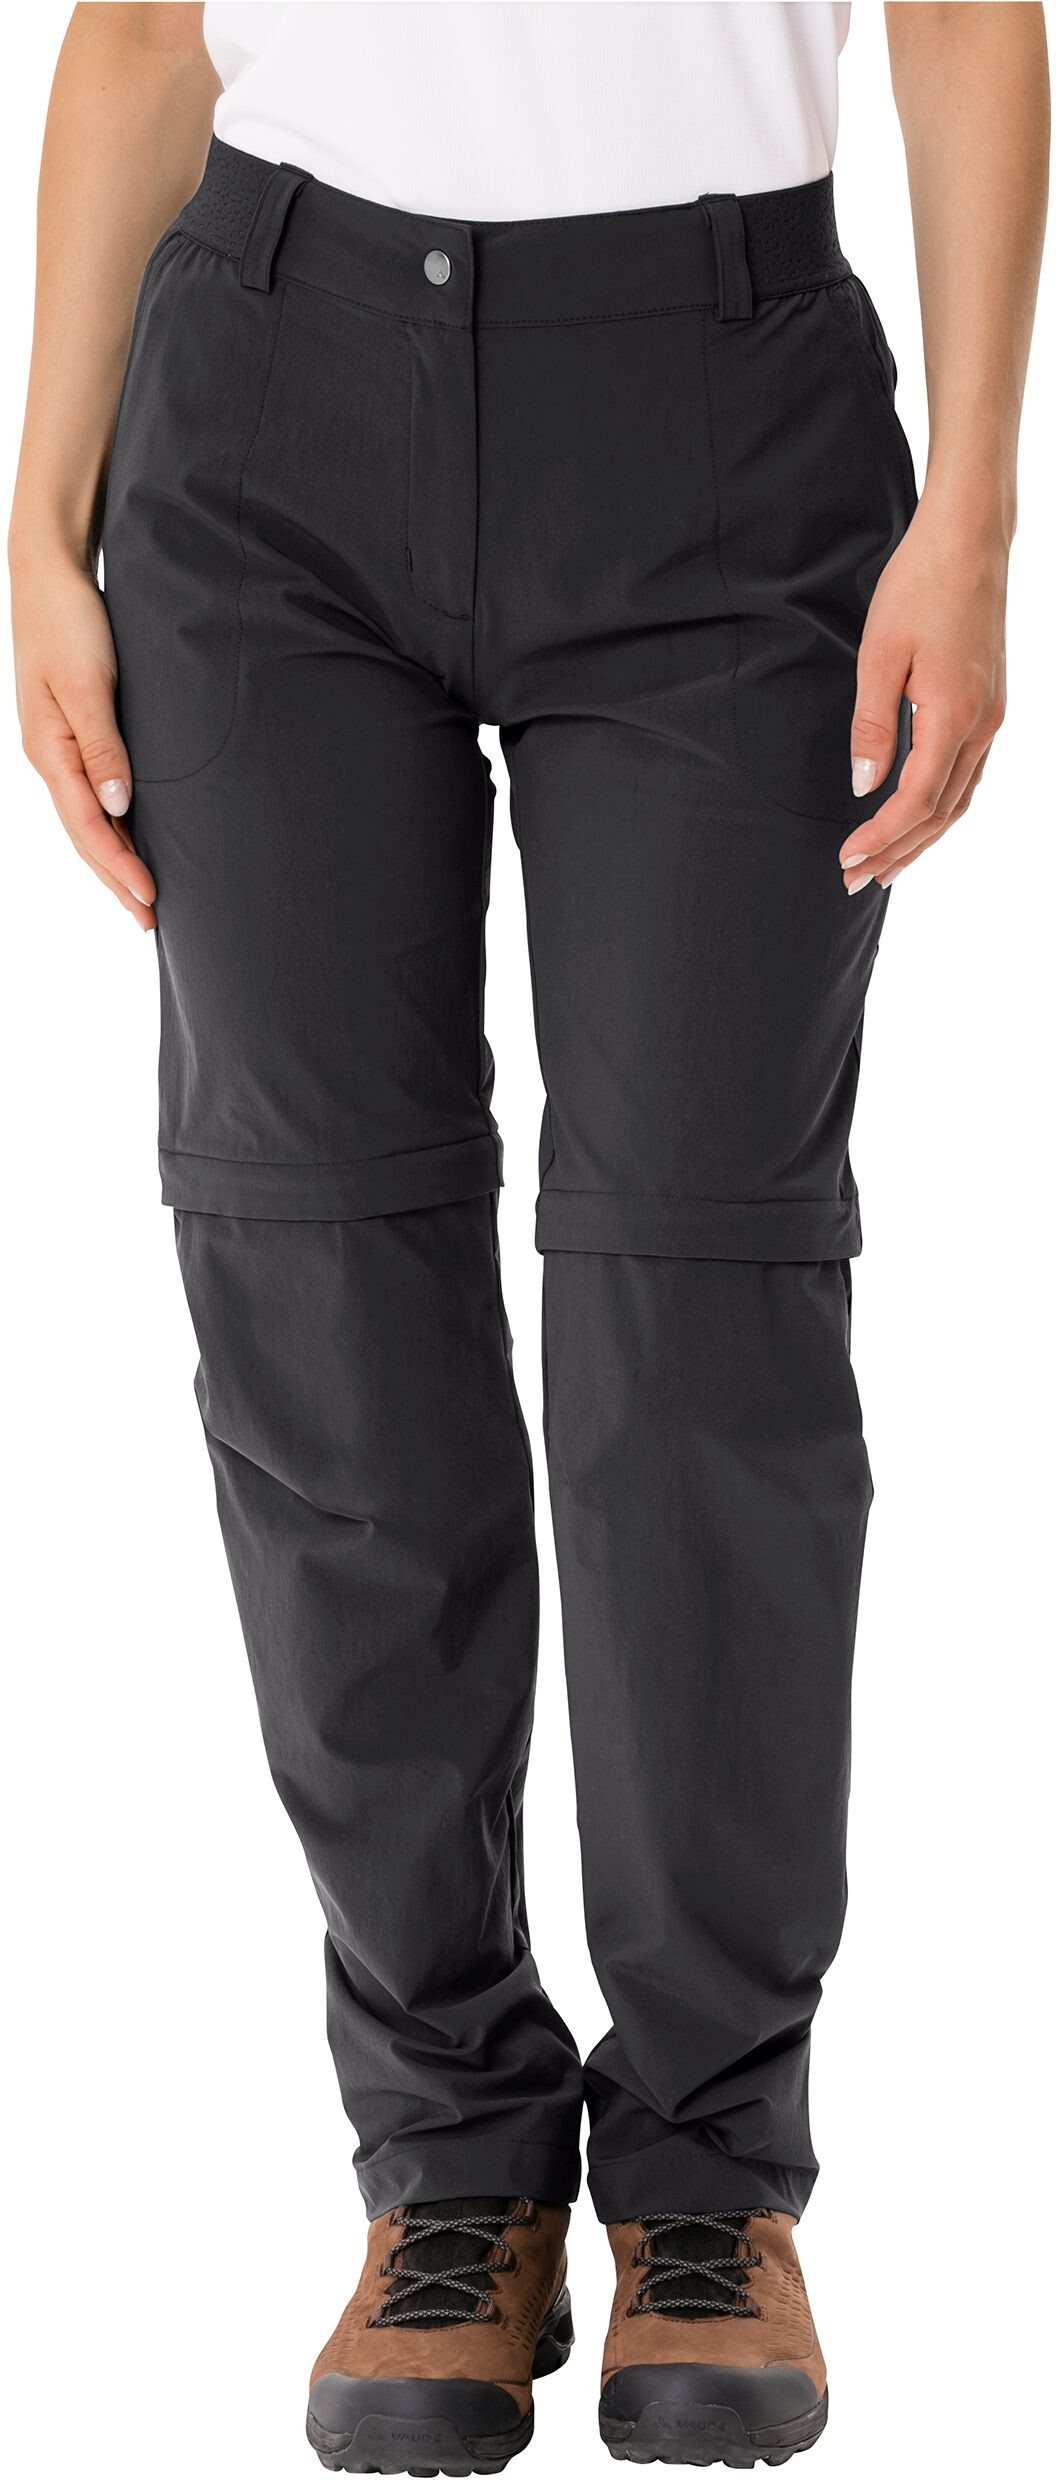 36-short/XS negro Vaude señora Skomer Capri zo Pants II pantalones Phantom Black